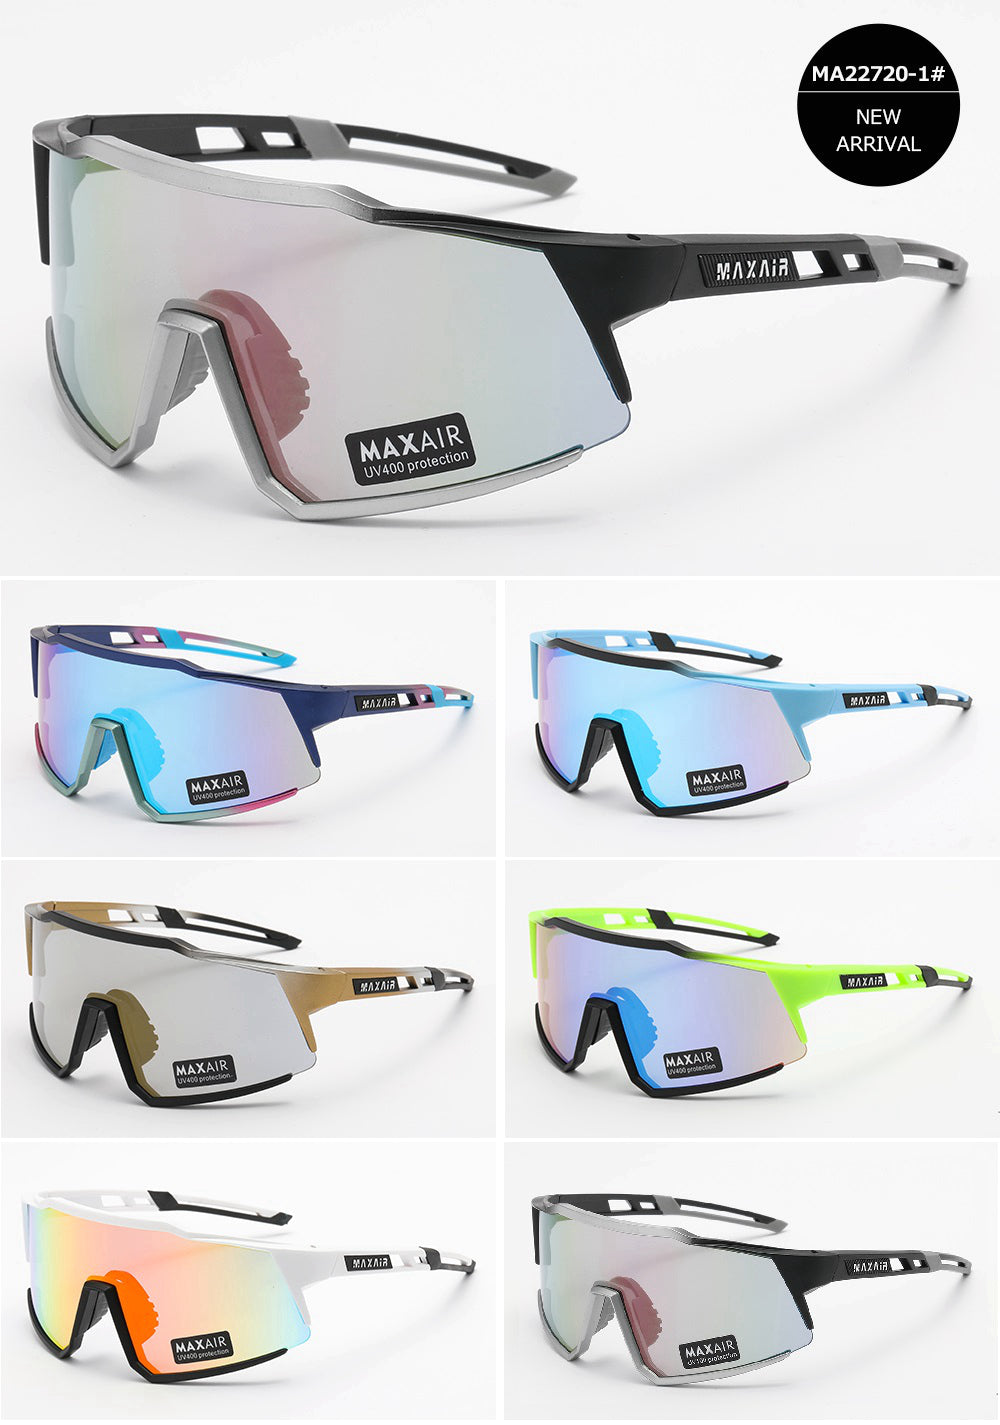 Maxair 22720-1 Sunglasses